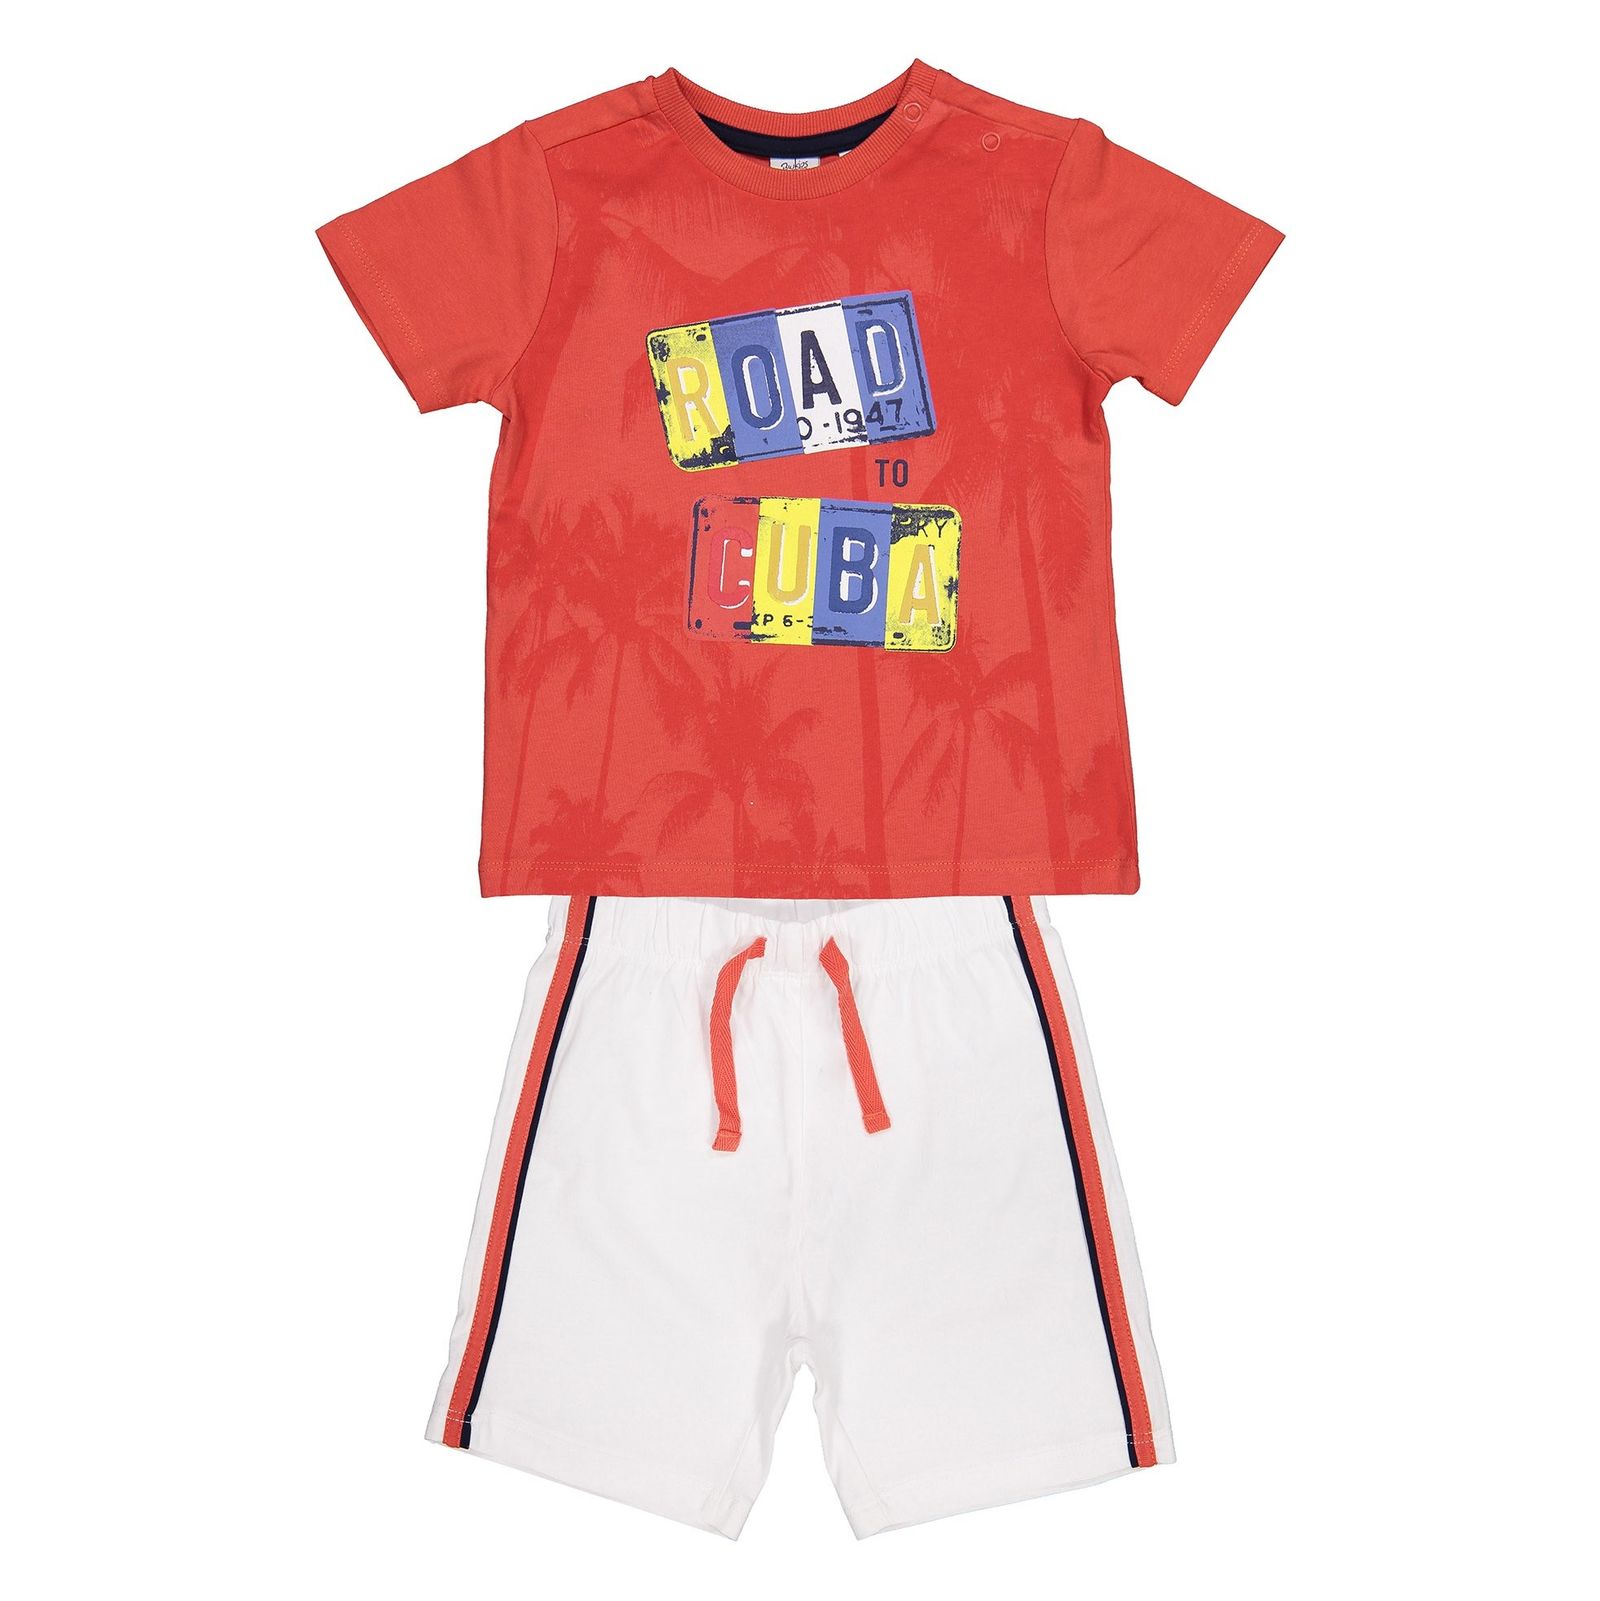 تی شرت و شلوارک نخی نوزادی پسرانه - بلوکیدز - قرمز و سفيد - 2